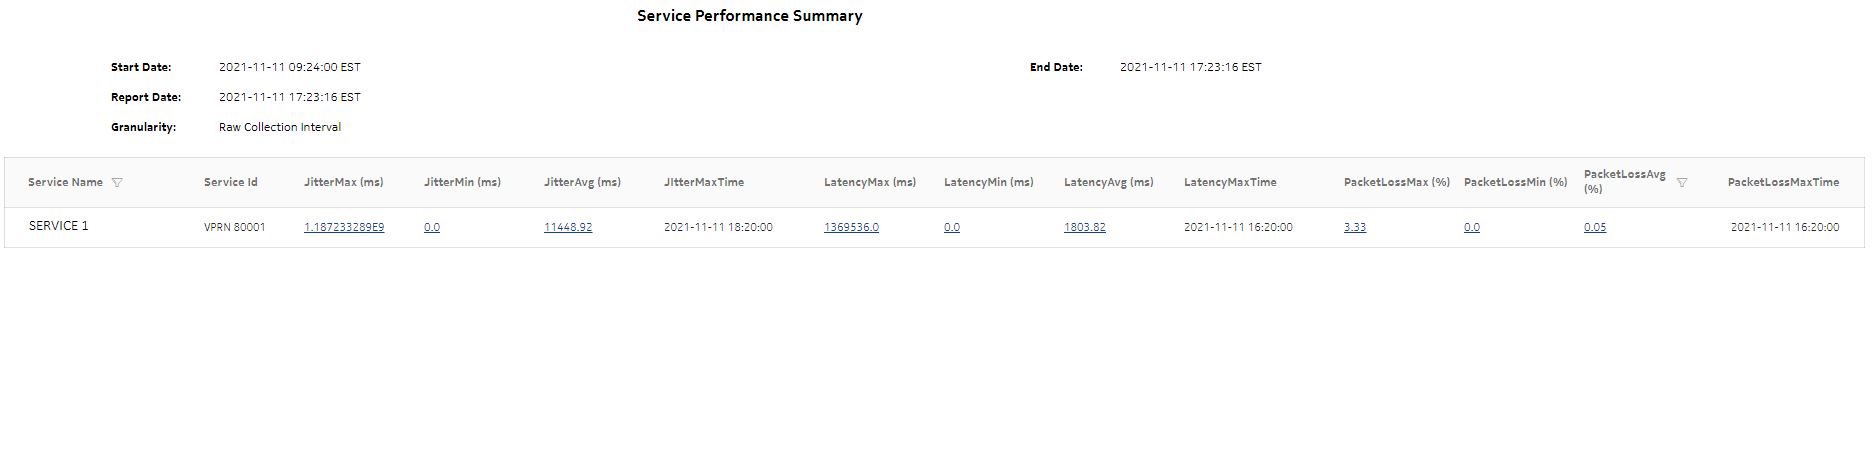 Service Performance Summary report